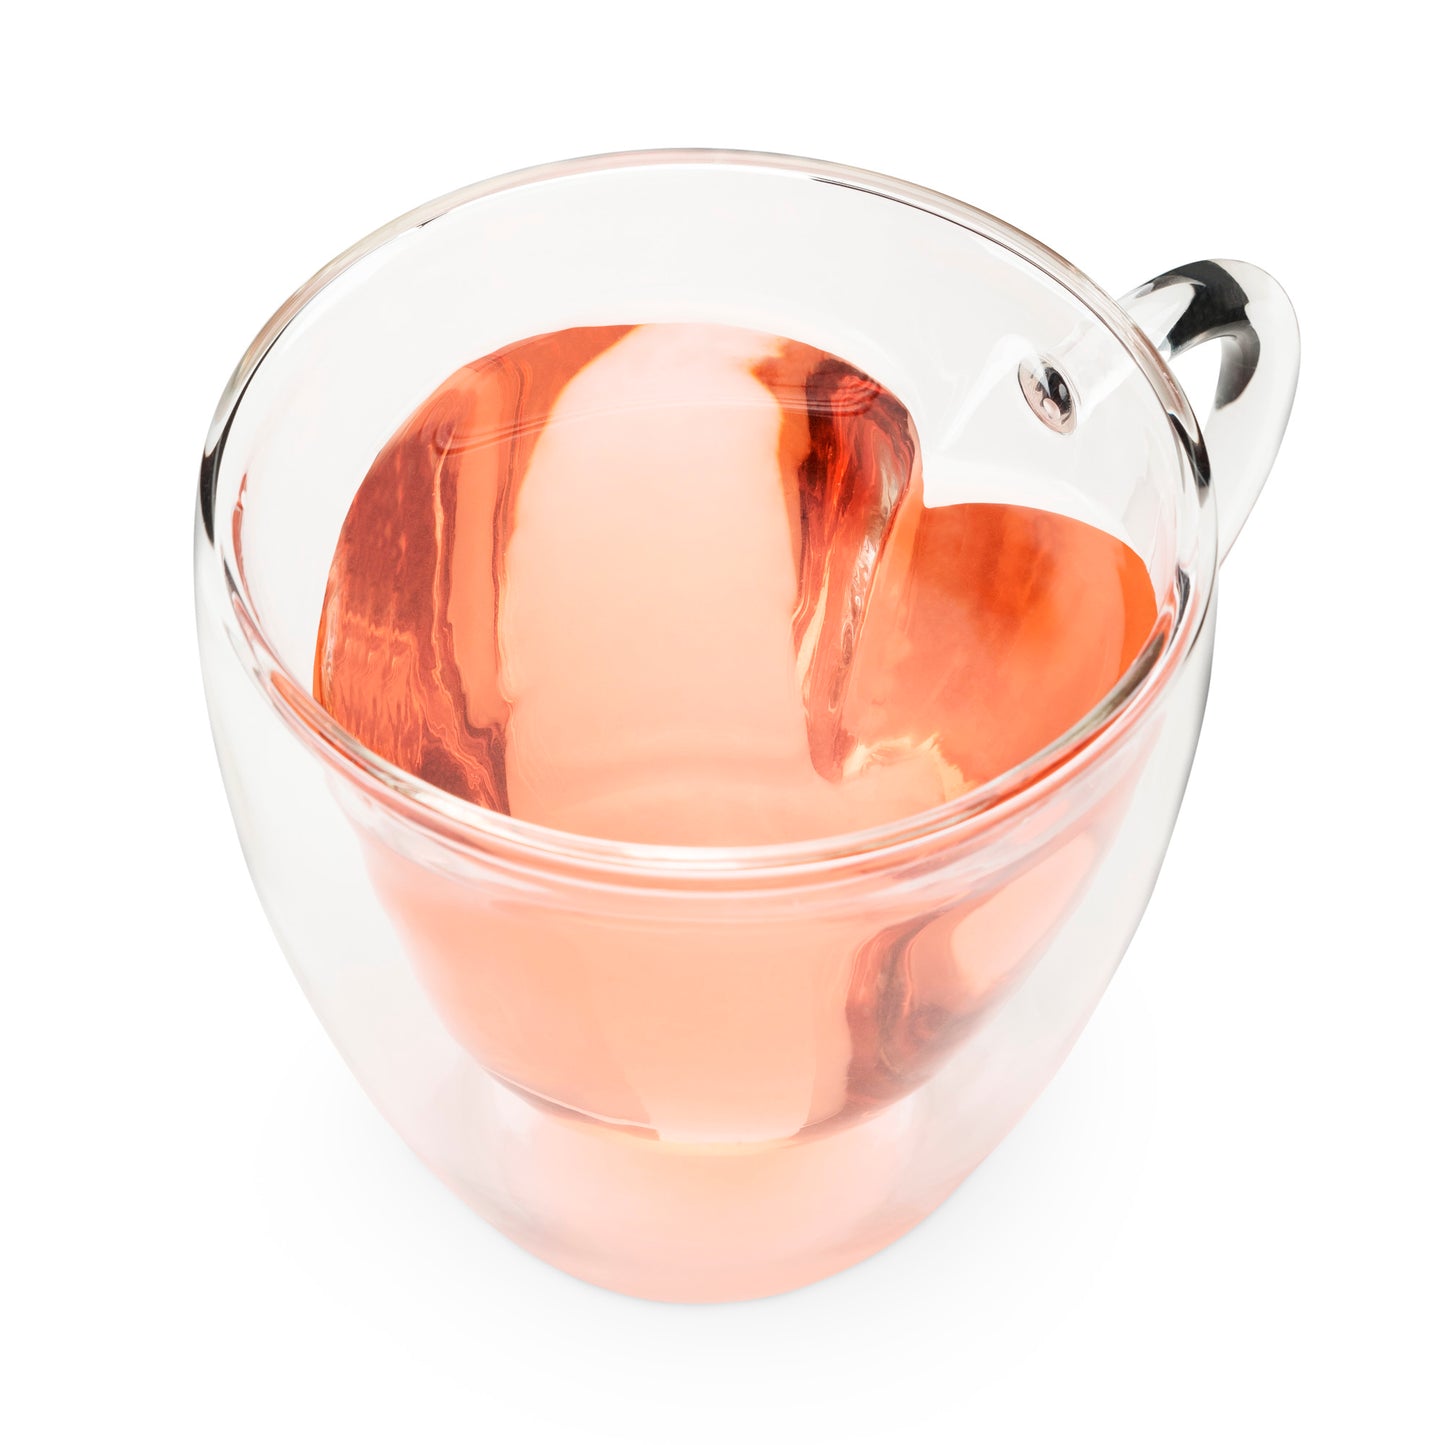 Pinky Up Kendall™ Heart Double Walled Glass Tea Mug - lily & onyx